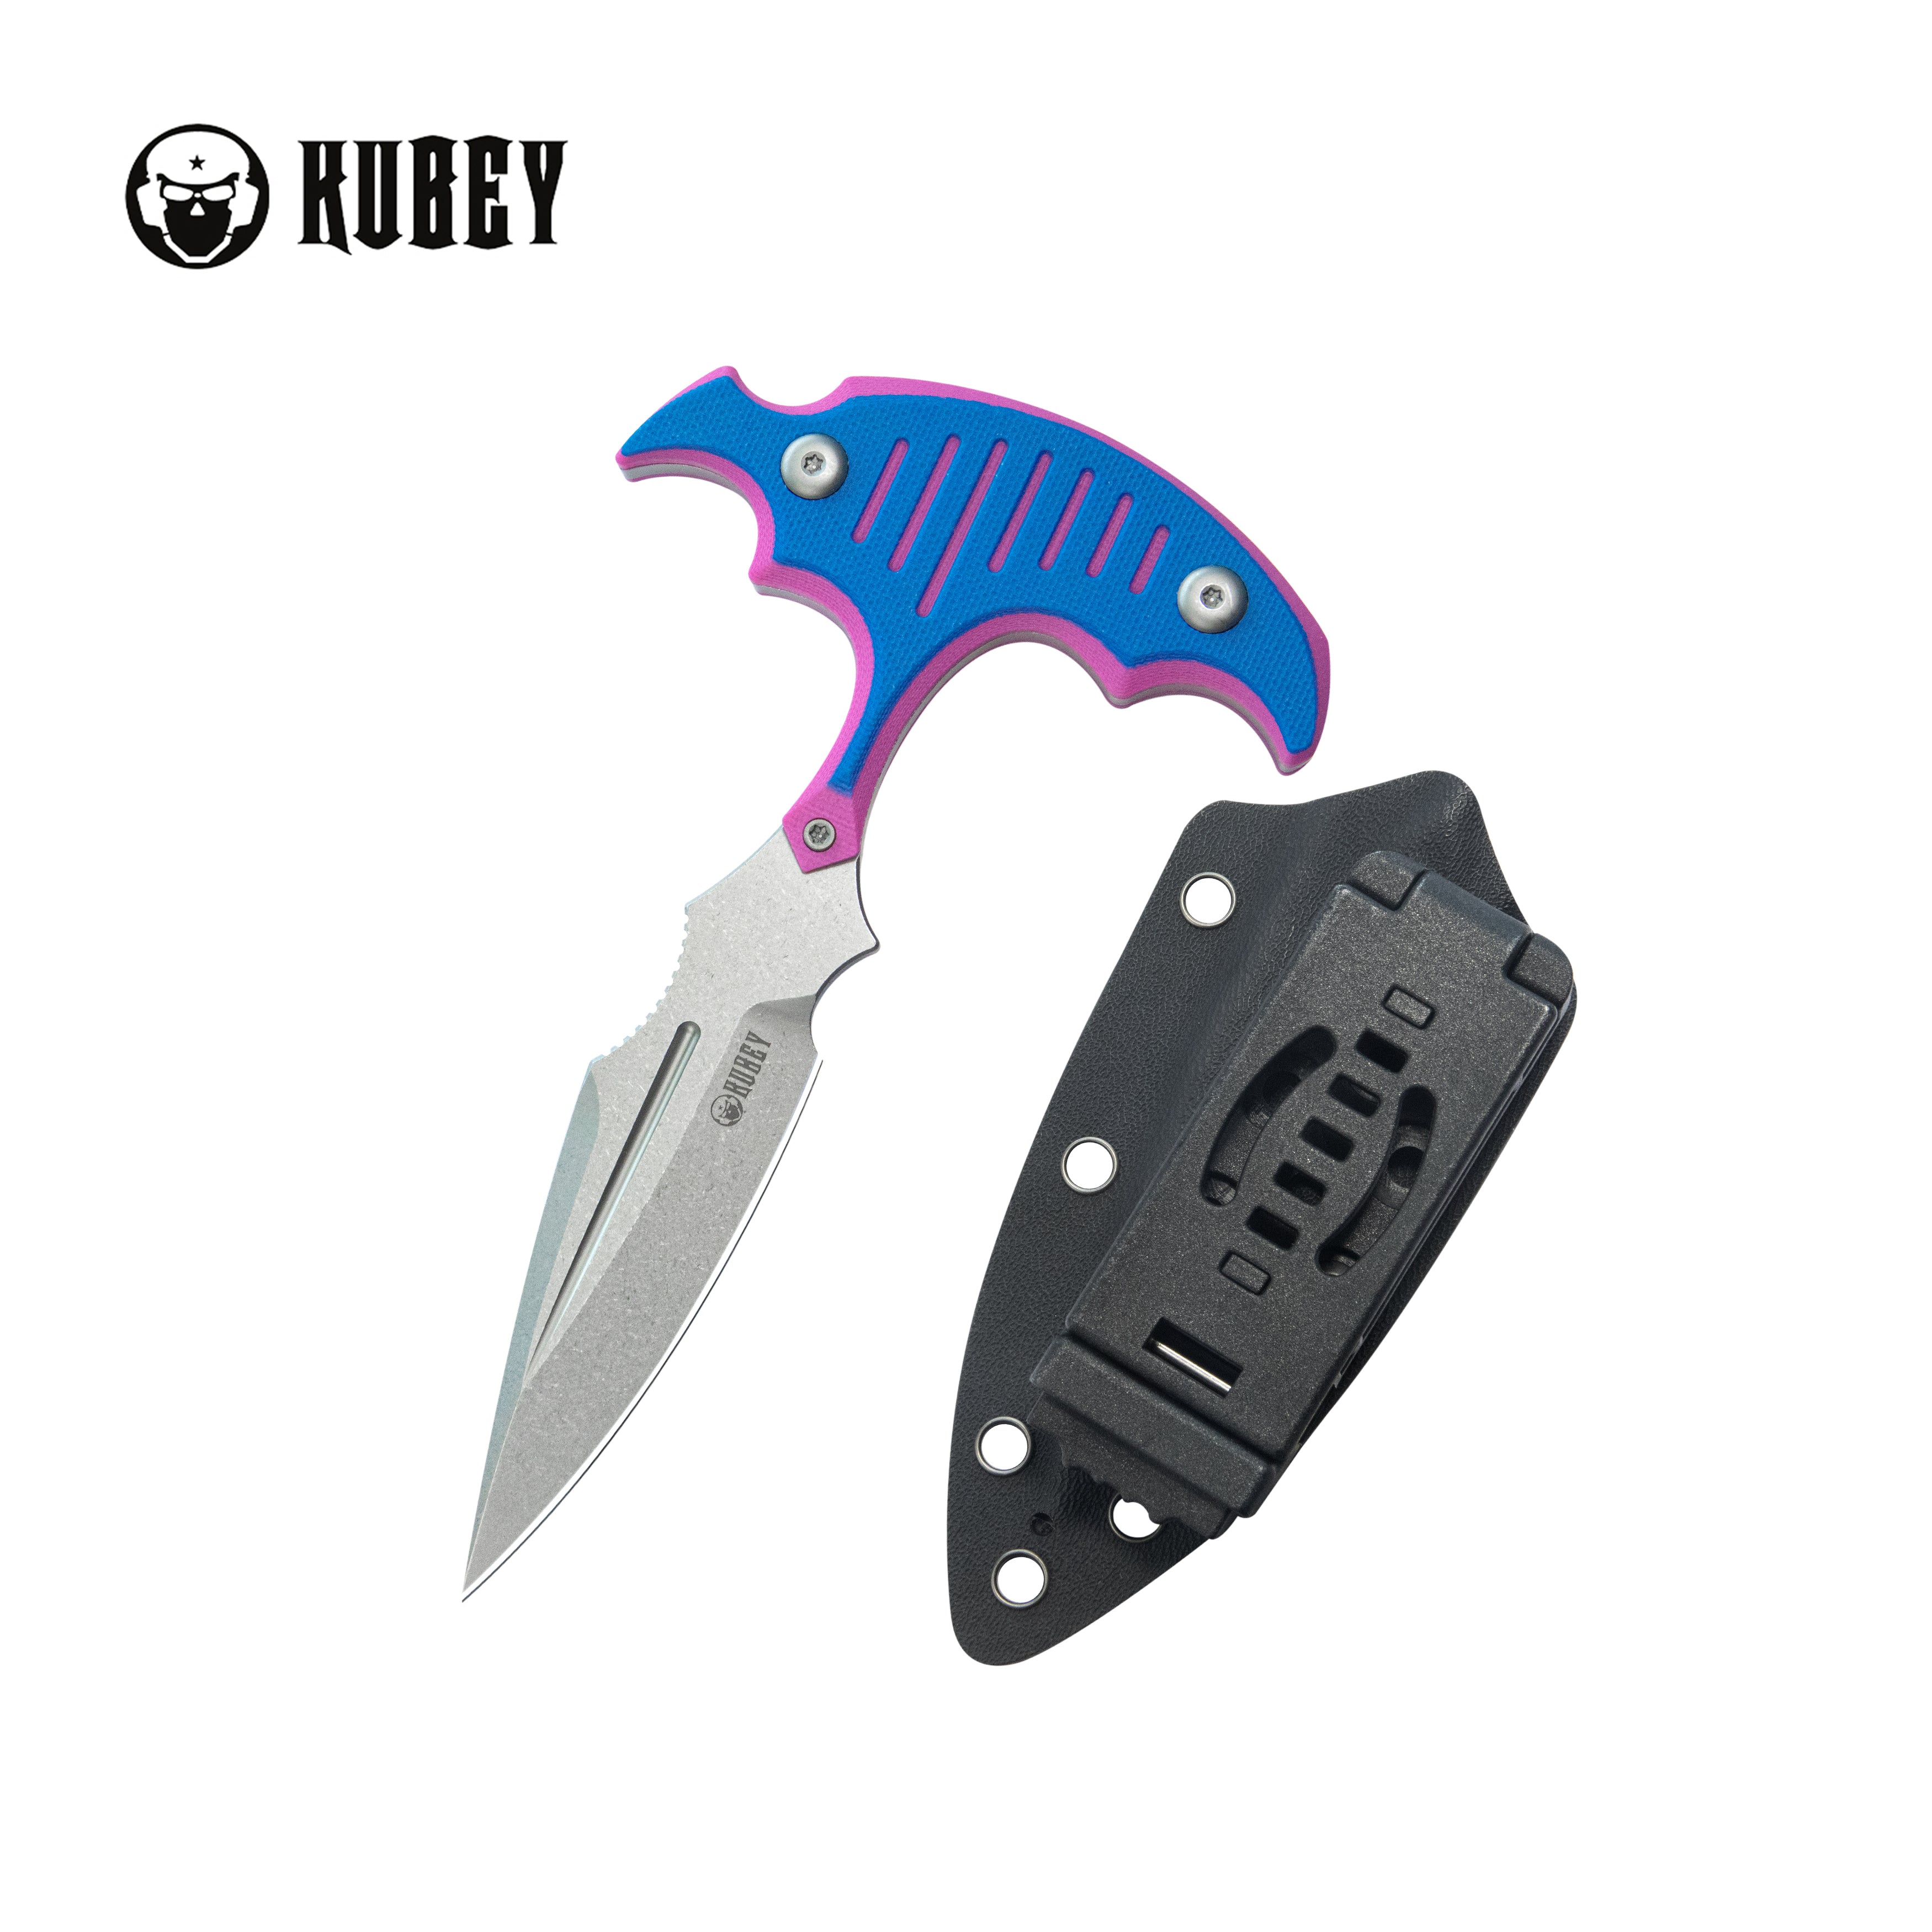 Medusa Push Dagger Fixed Blade Outdoor Knives w/ Kydex Sheath Pink Blue G-10 Beadblast 14C28N KU242F